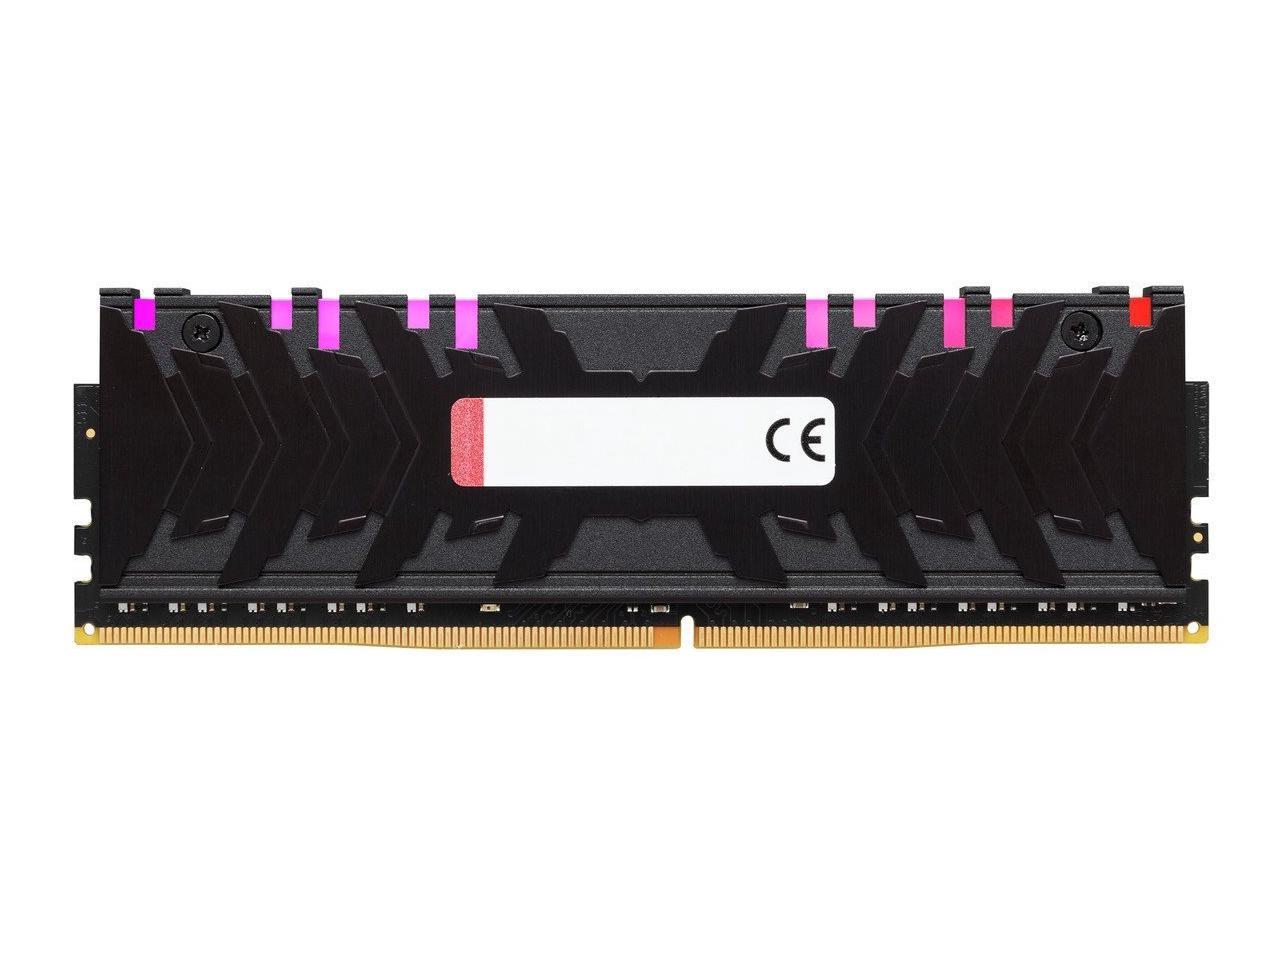 HyperX Predator DDR4 RGB 16GB (2 x 8GB) 4000MHz CL19 DIMM XMP RAM Memory/Infrared Sync Technology Black (HX440C19PB3AK2/16)